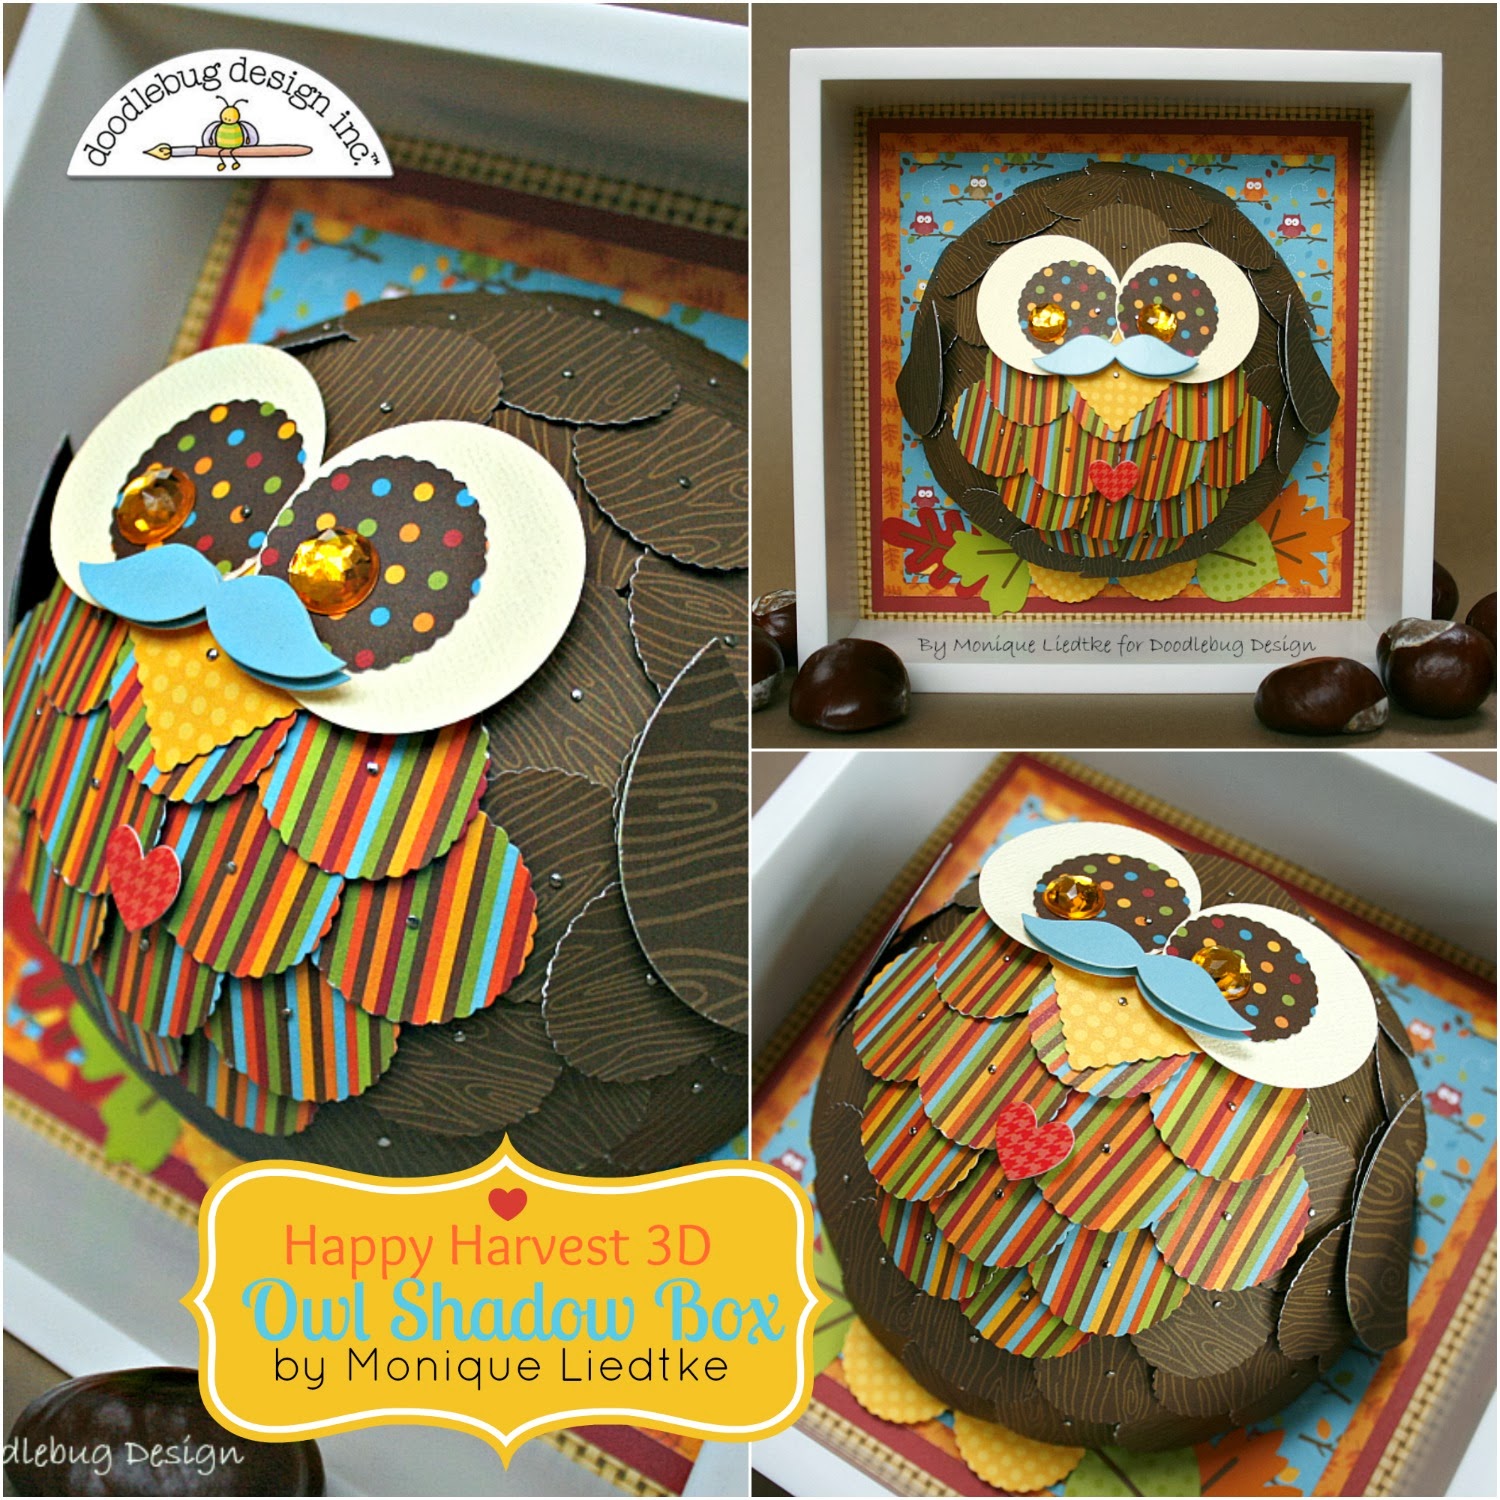 Doodlebug Design Inc Blog: 3D Owl Shadow Box by Monique